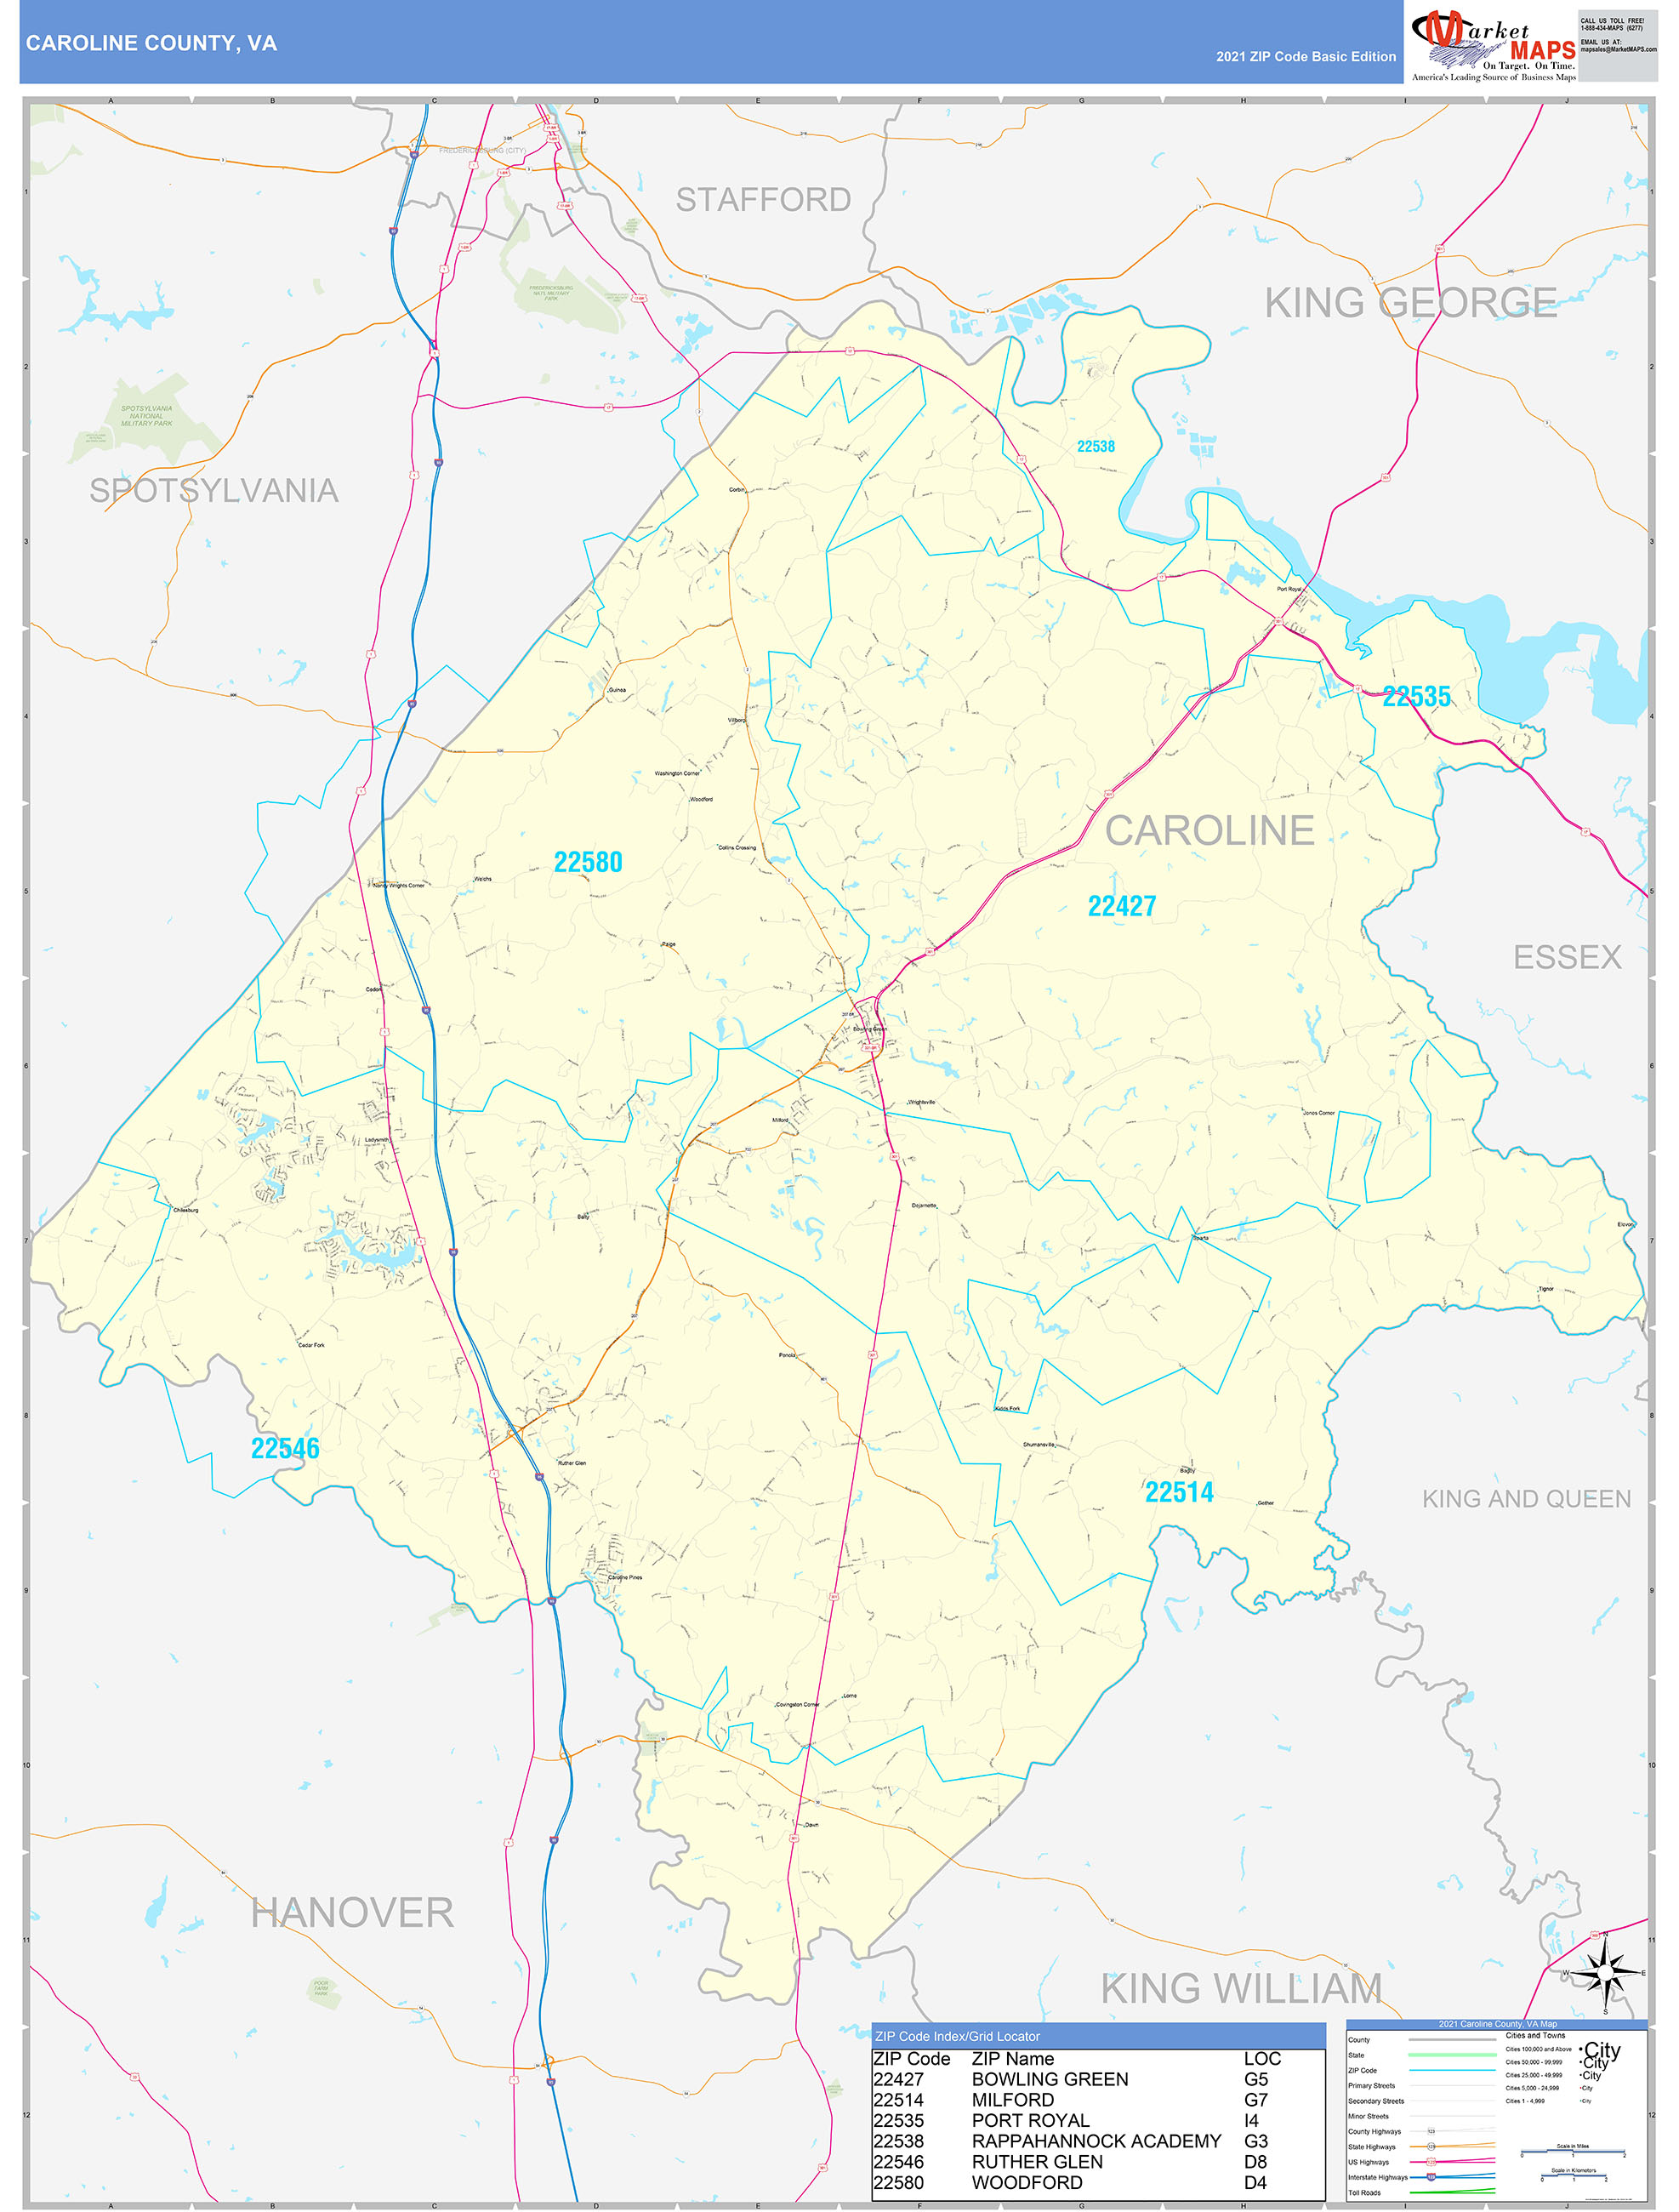 Caroline County, VA Zip Code Wall Map Basic Style by MarketMAPS - MapSales